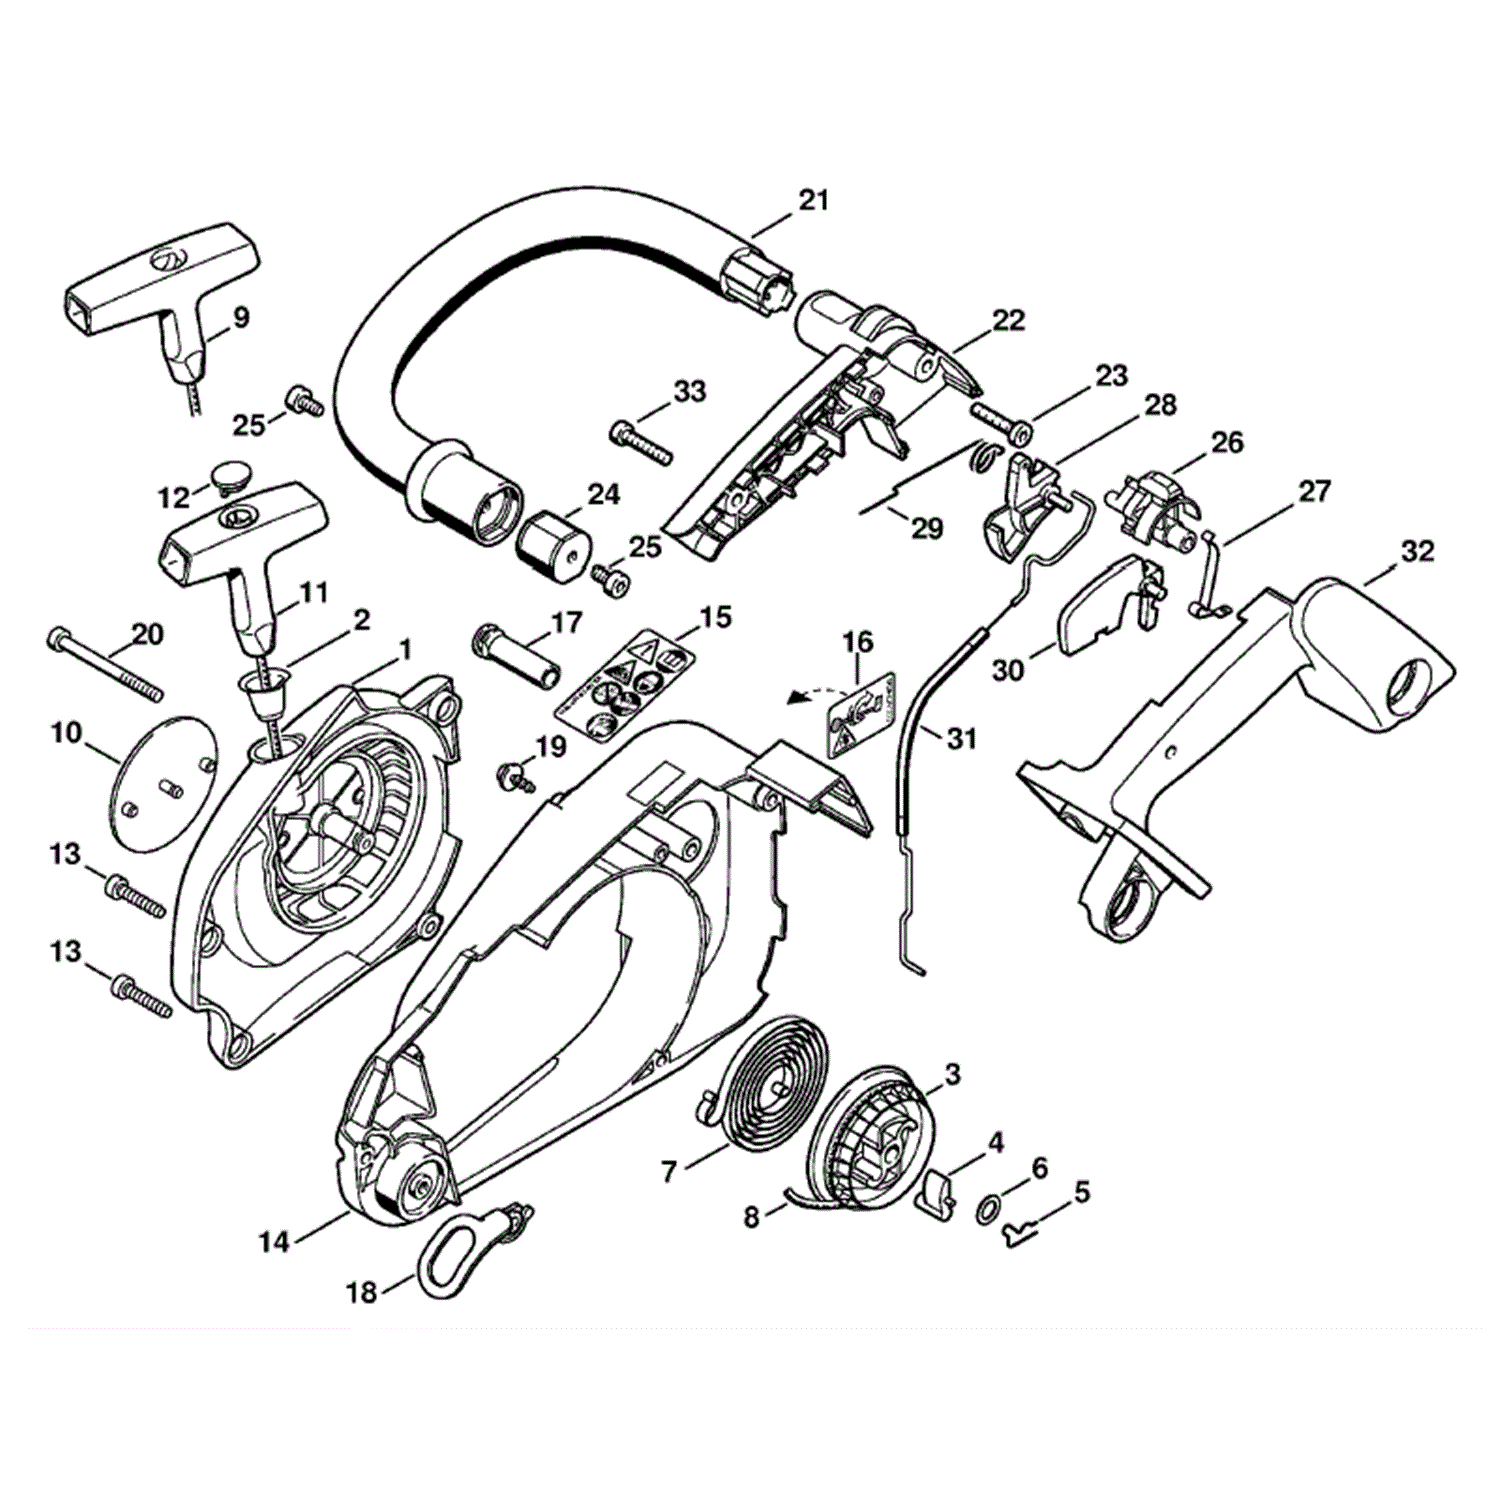 Stihl MS 191 Chainsaw (MS191T) Parts Diagram, Fan Housing